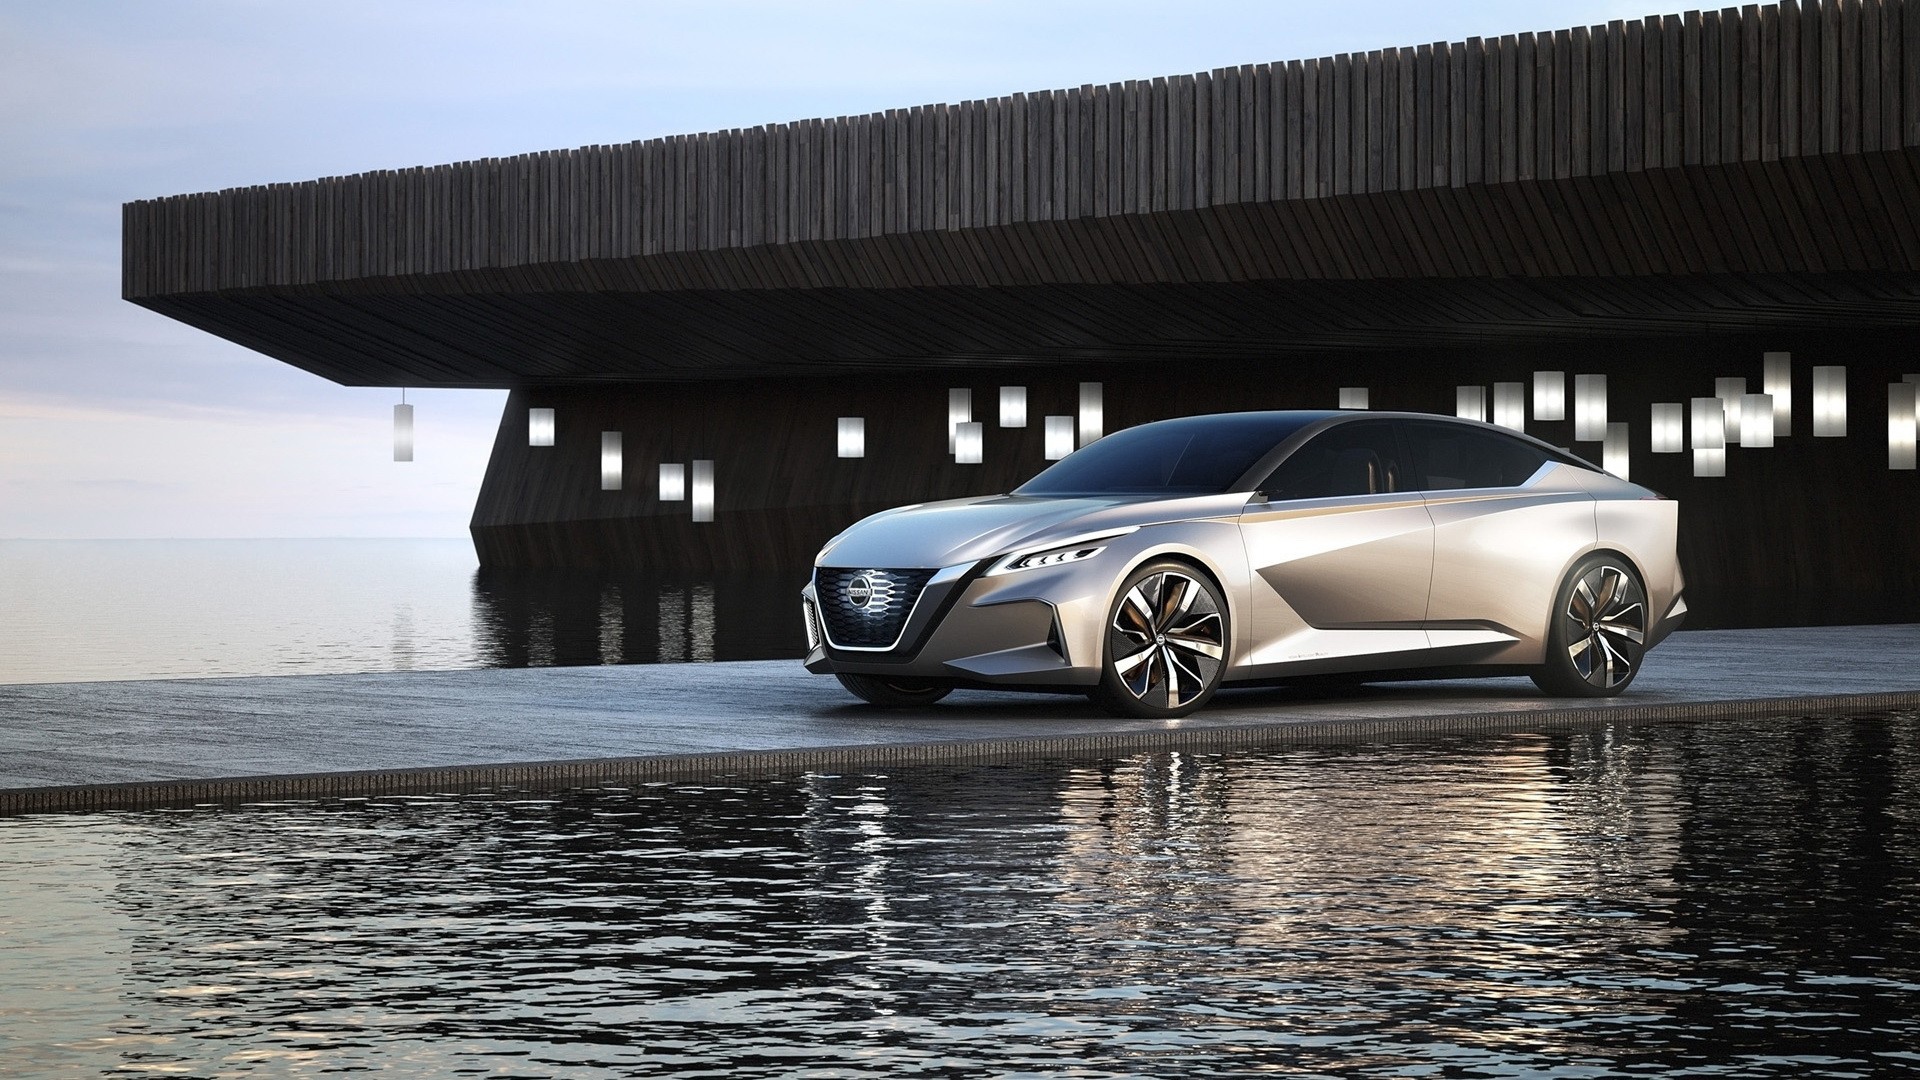 Серебристый автомобиль Nissan Vmotion 2.0 Concept, 2017 у воды 